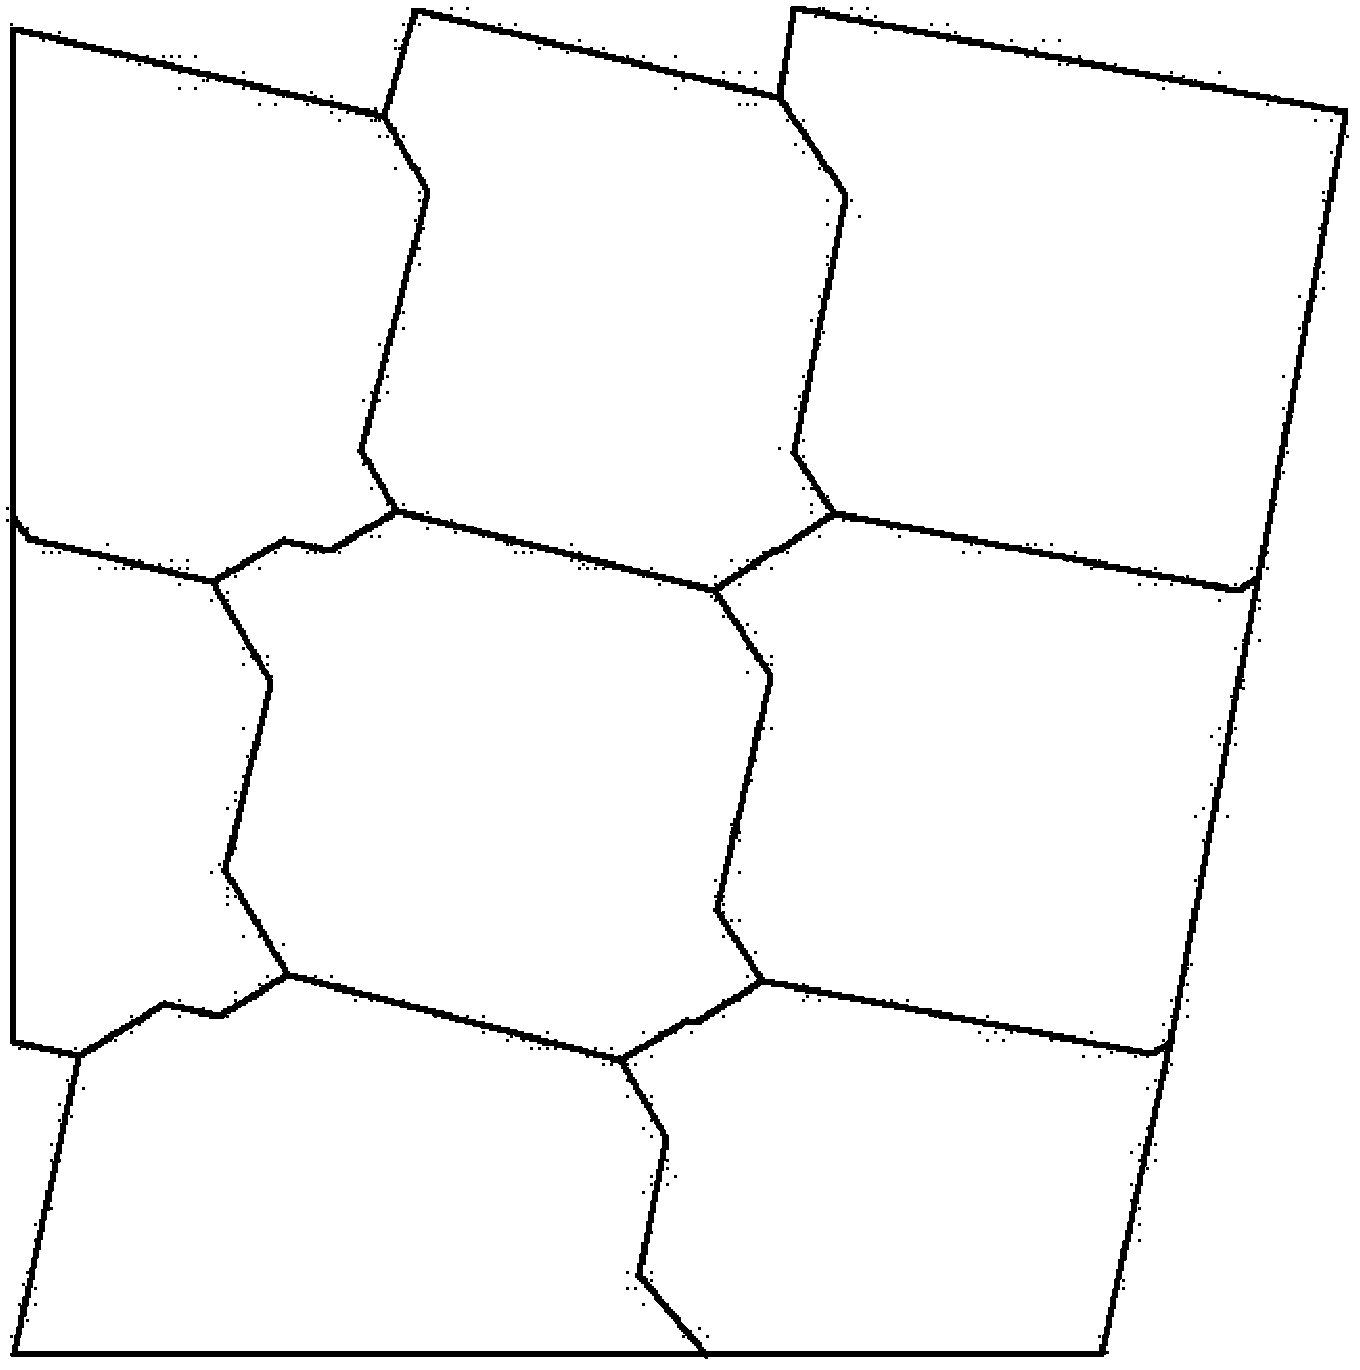 Seam line network generating method suitable for convex polygonal image effective ranges